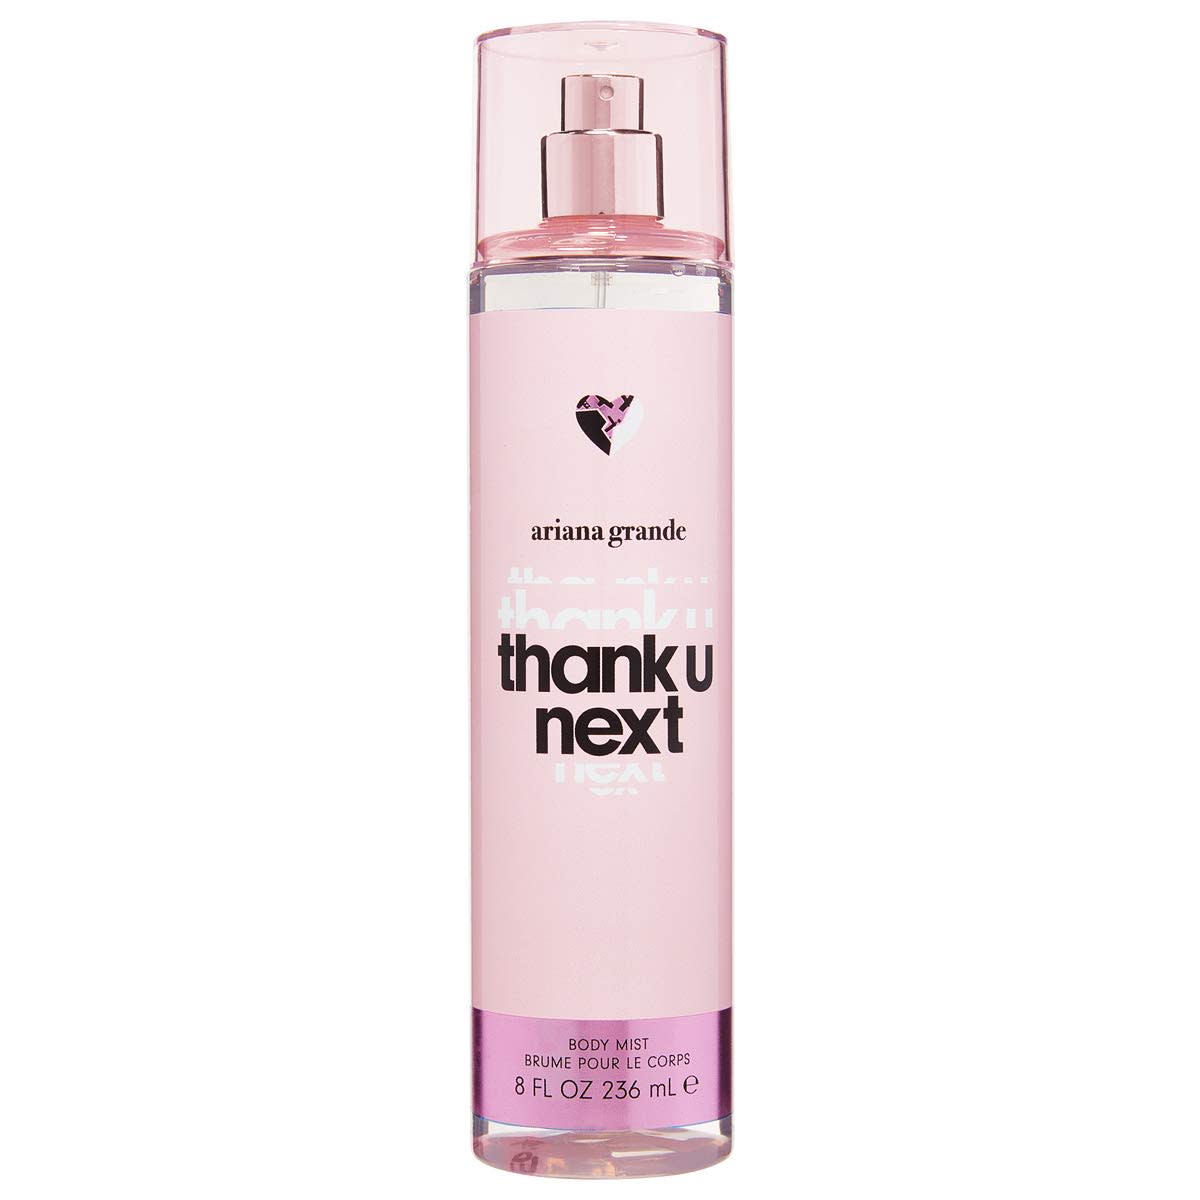 Is Ariana Grande’s “Thank U, Next” Body Mist Fragrance Worth It?